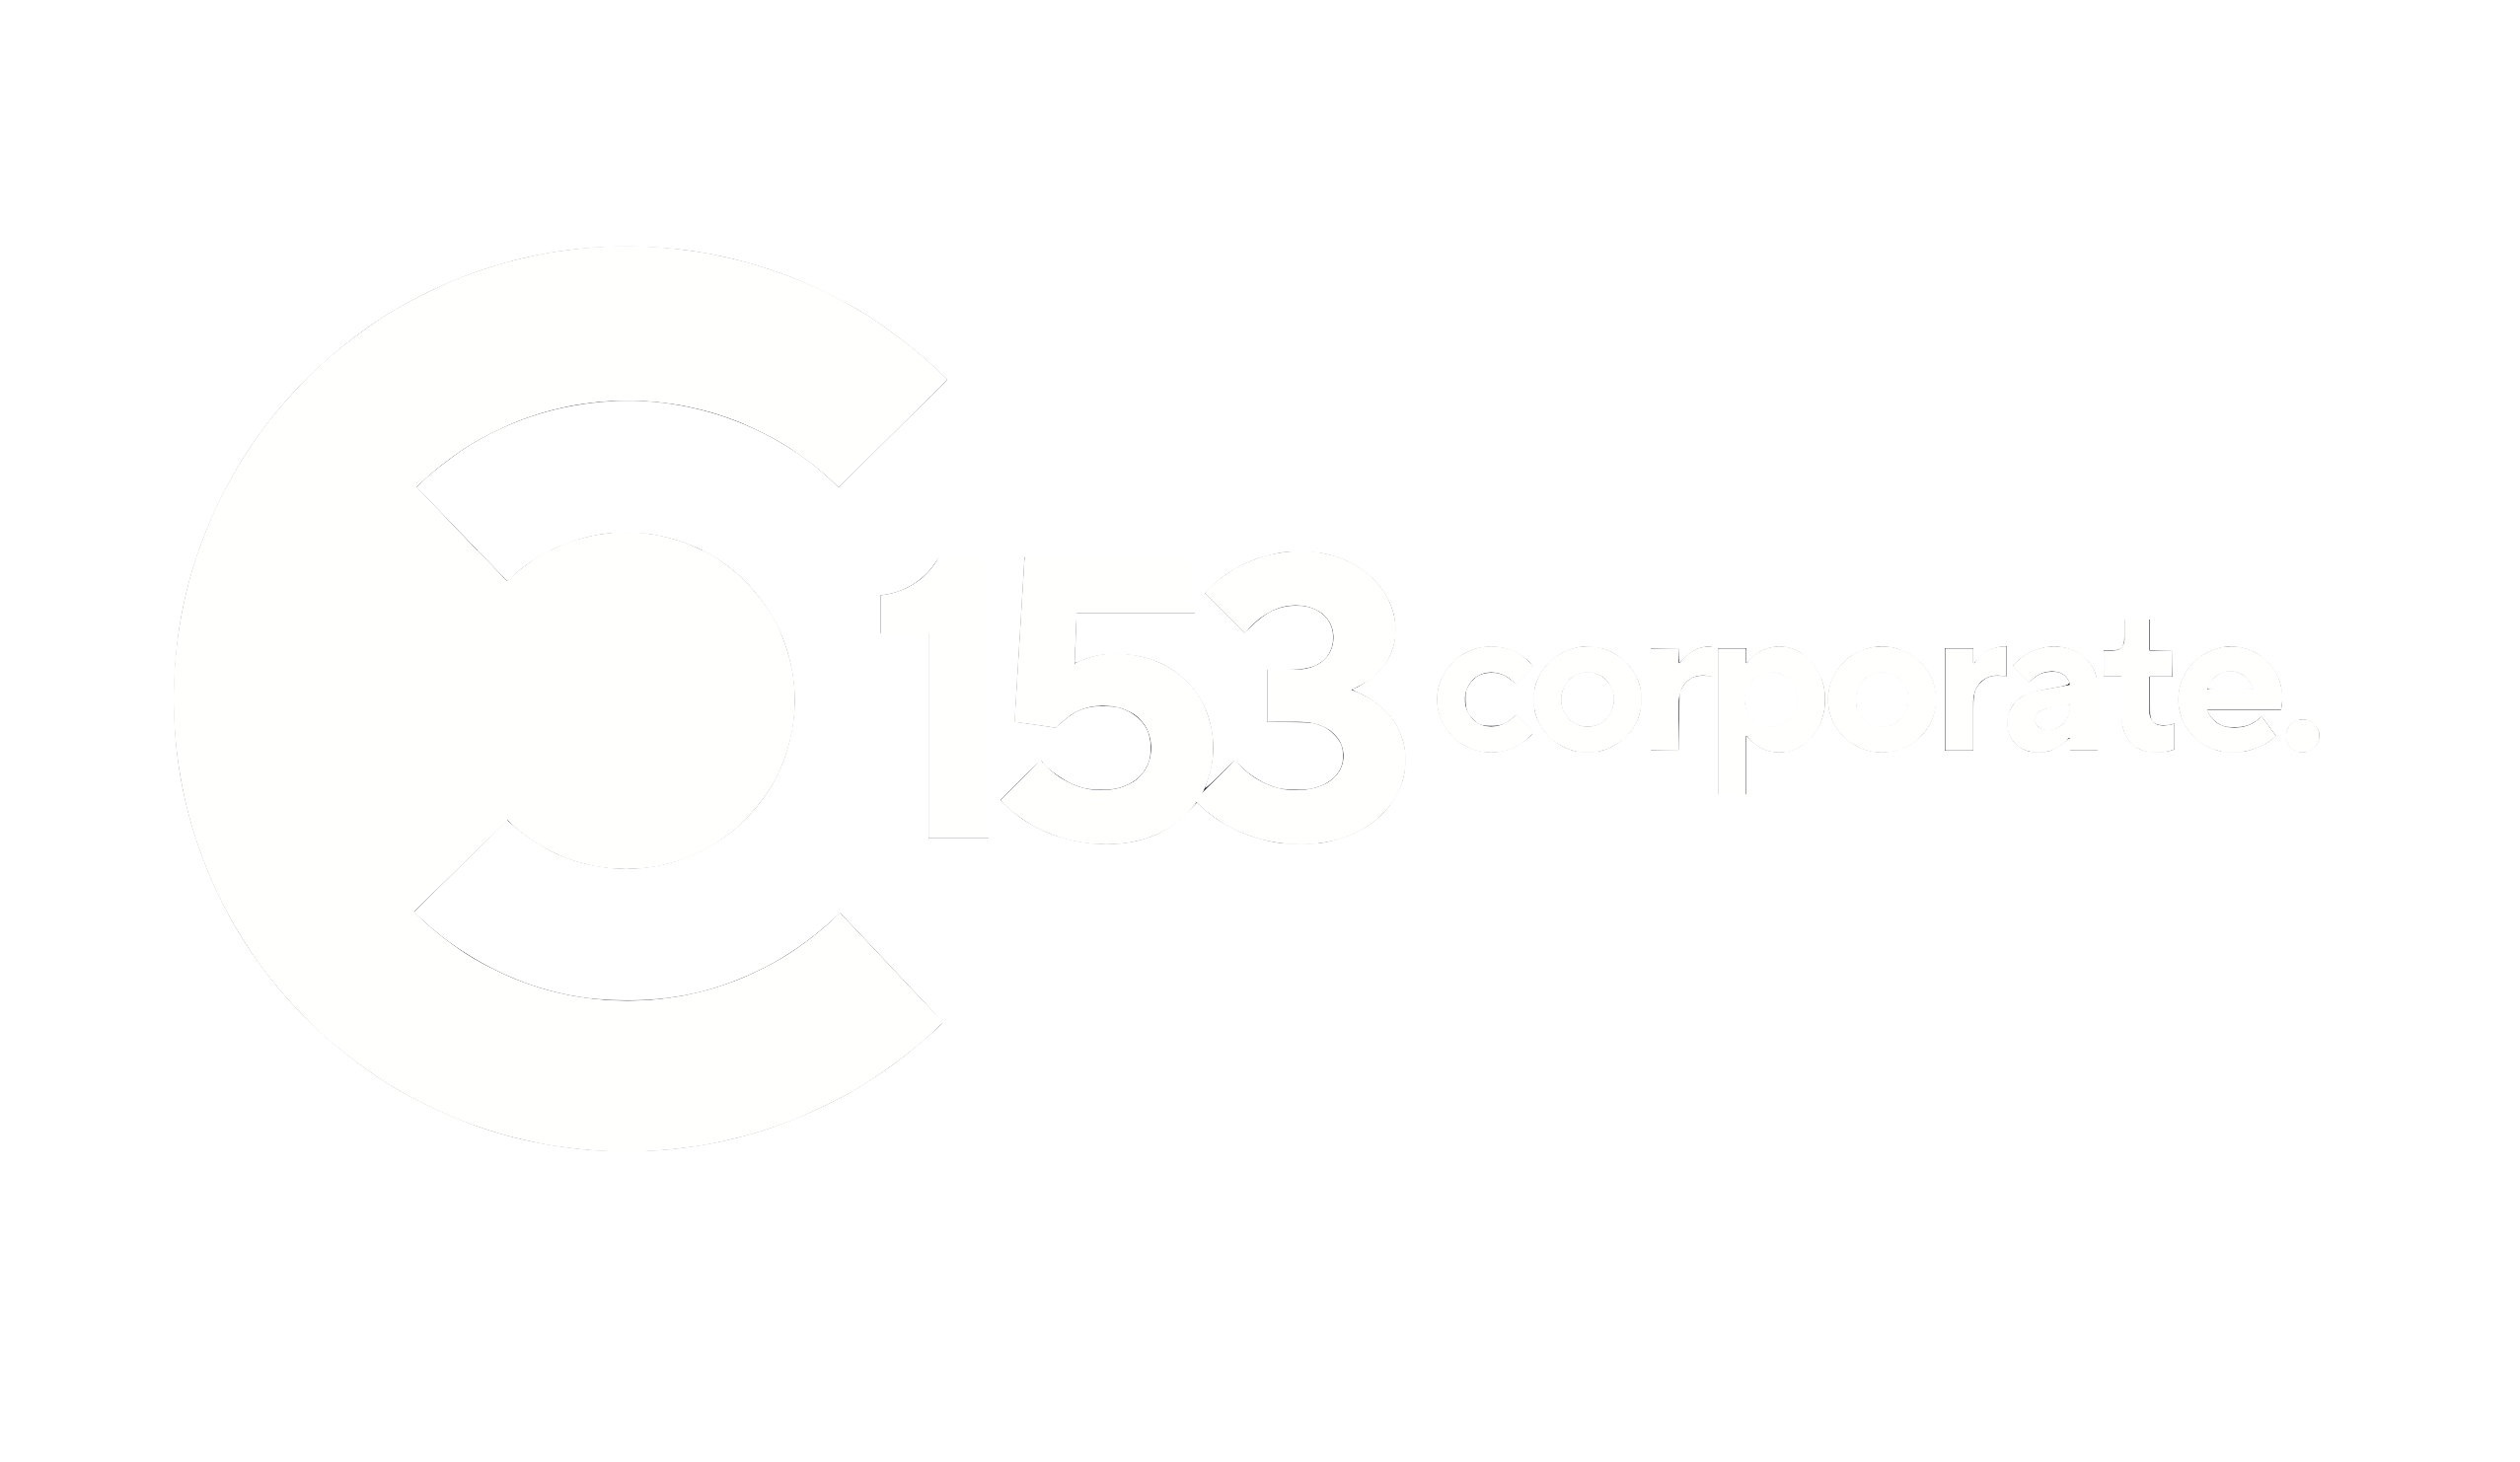 153 Corporate